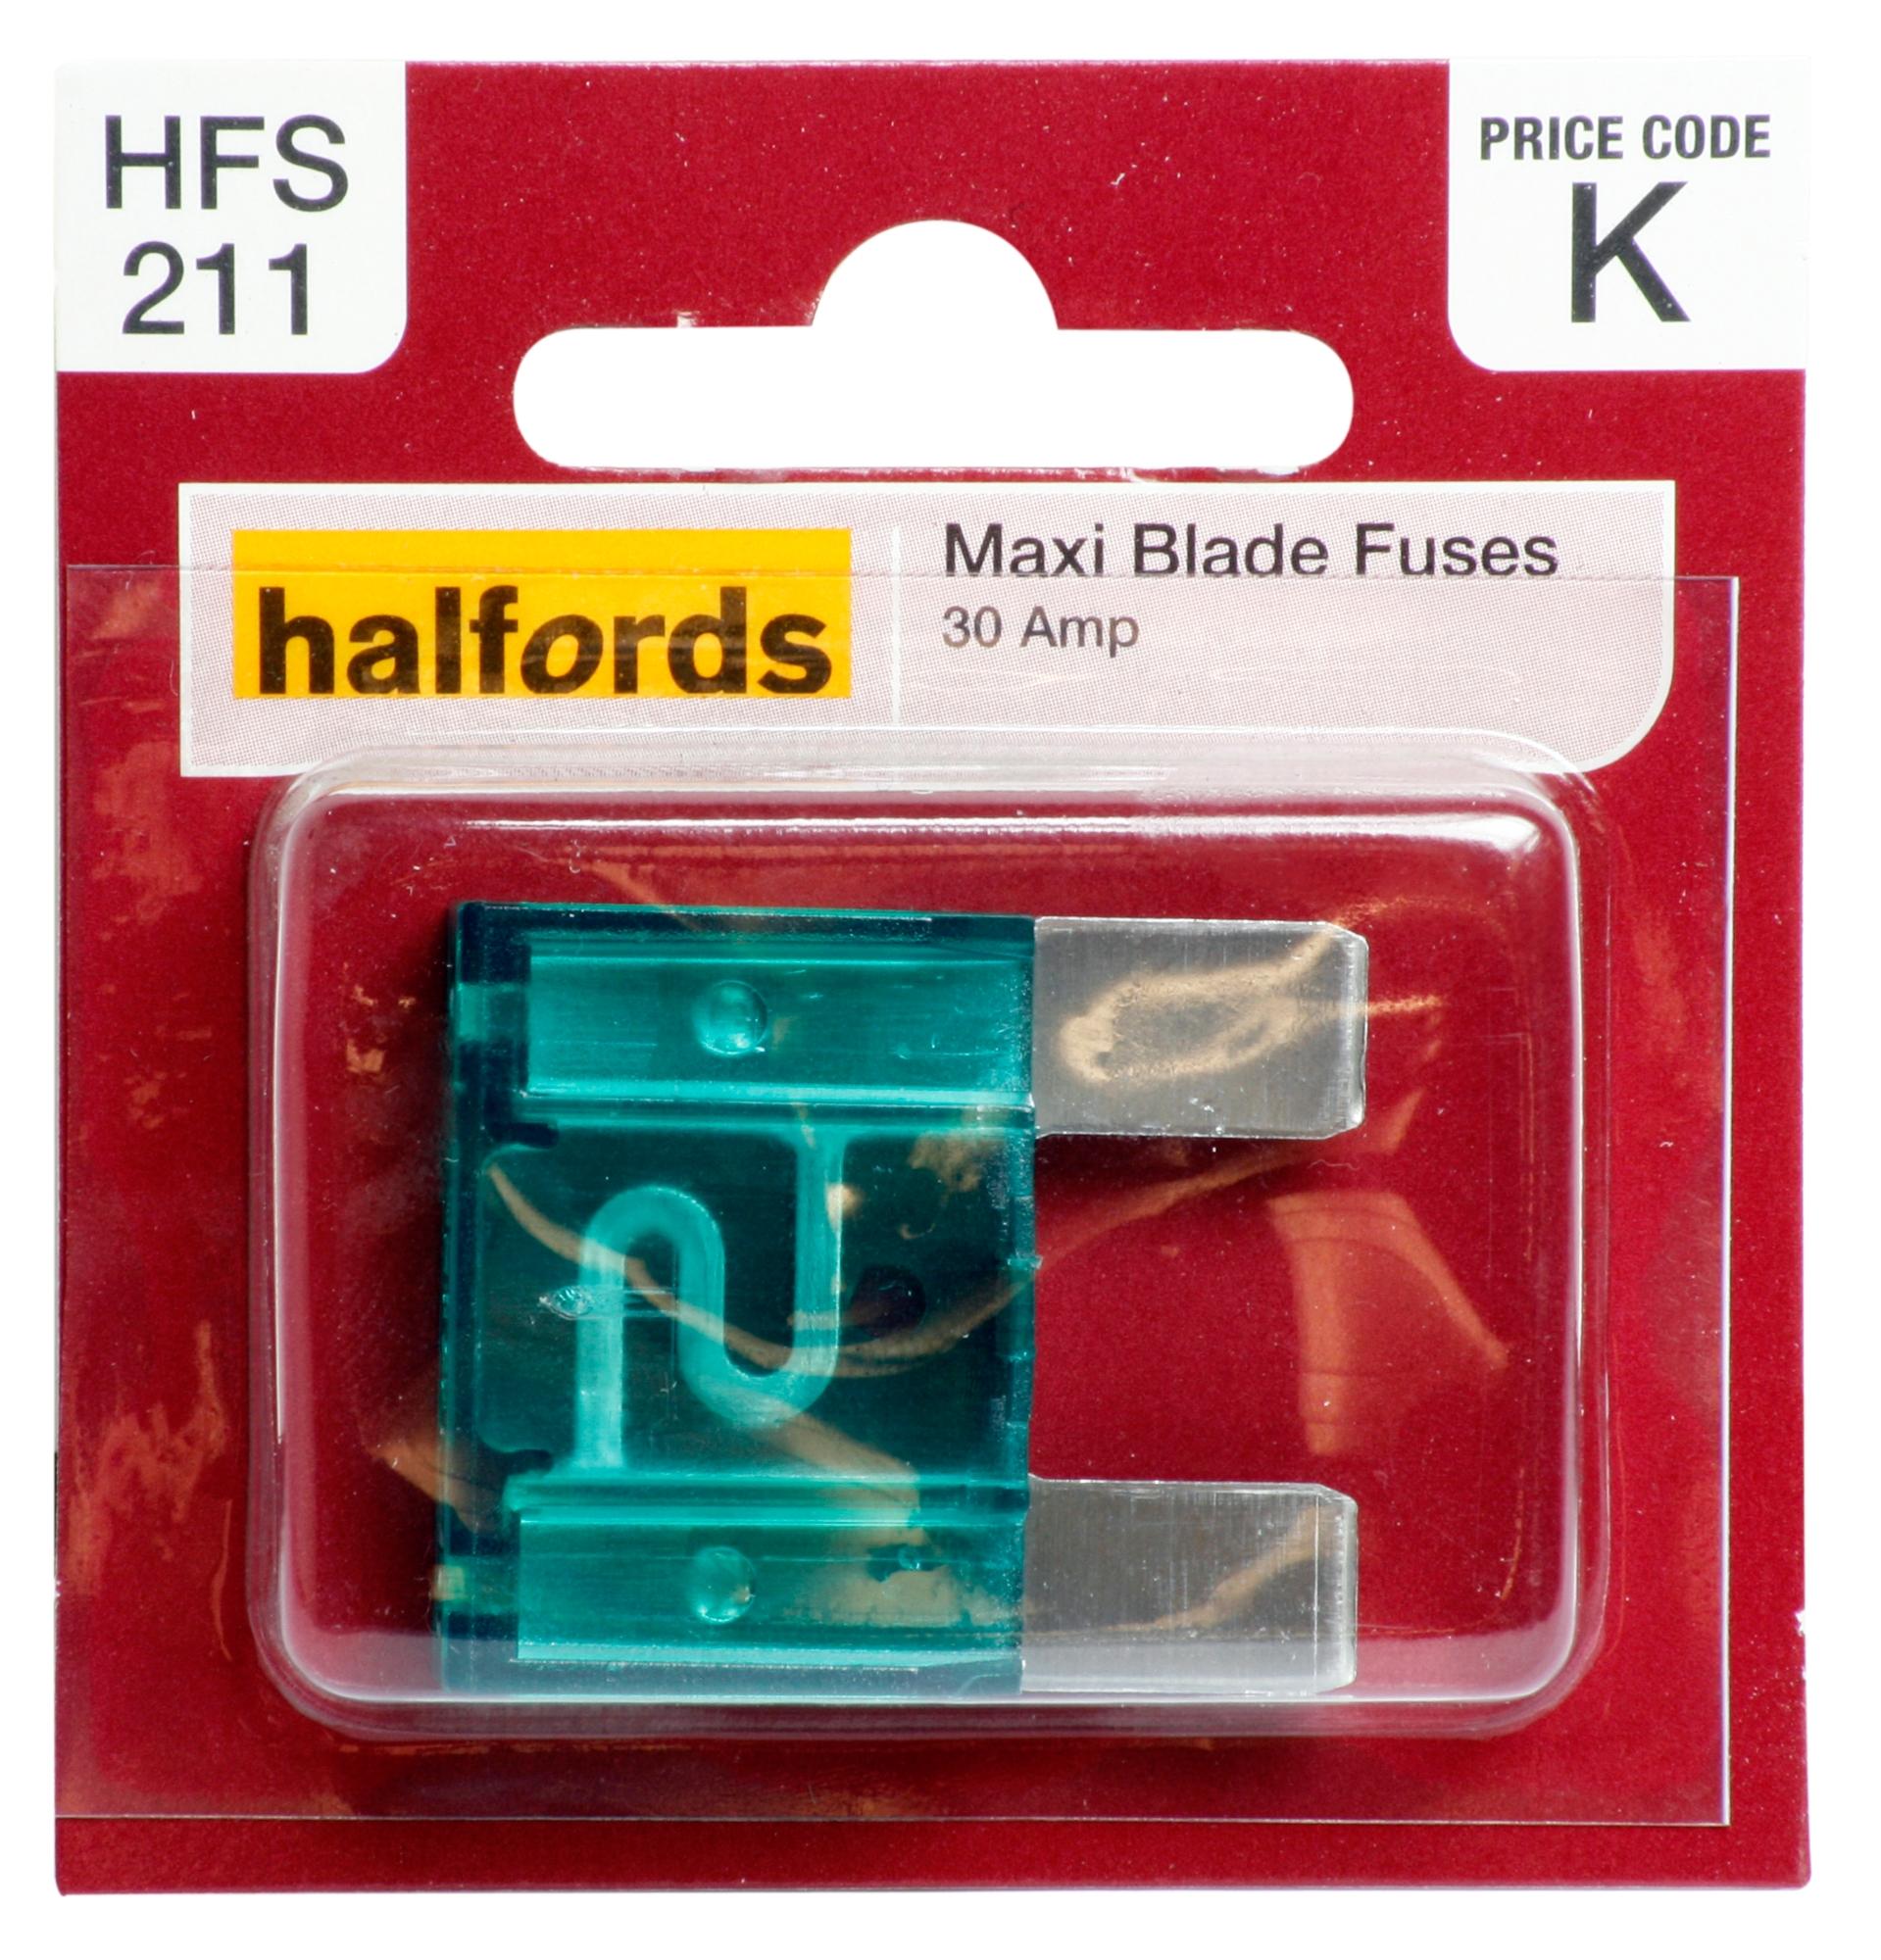 Halfords Maxi Blade Fuses 30 Amp (Hfs211)